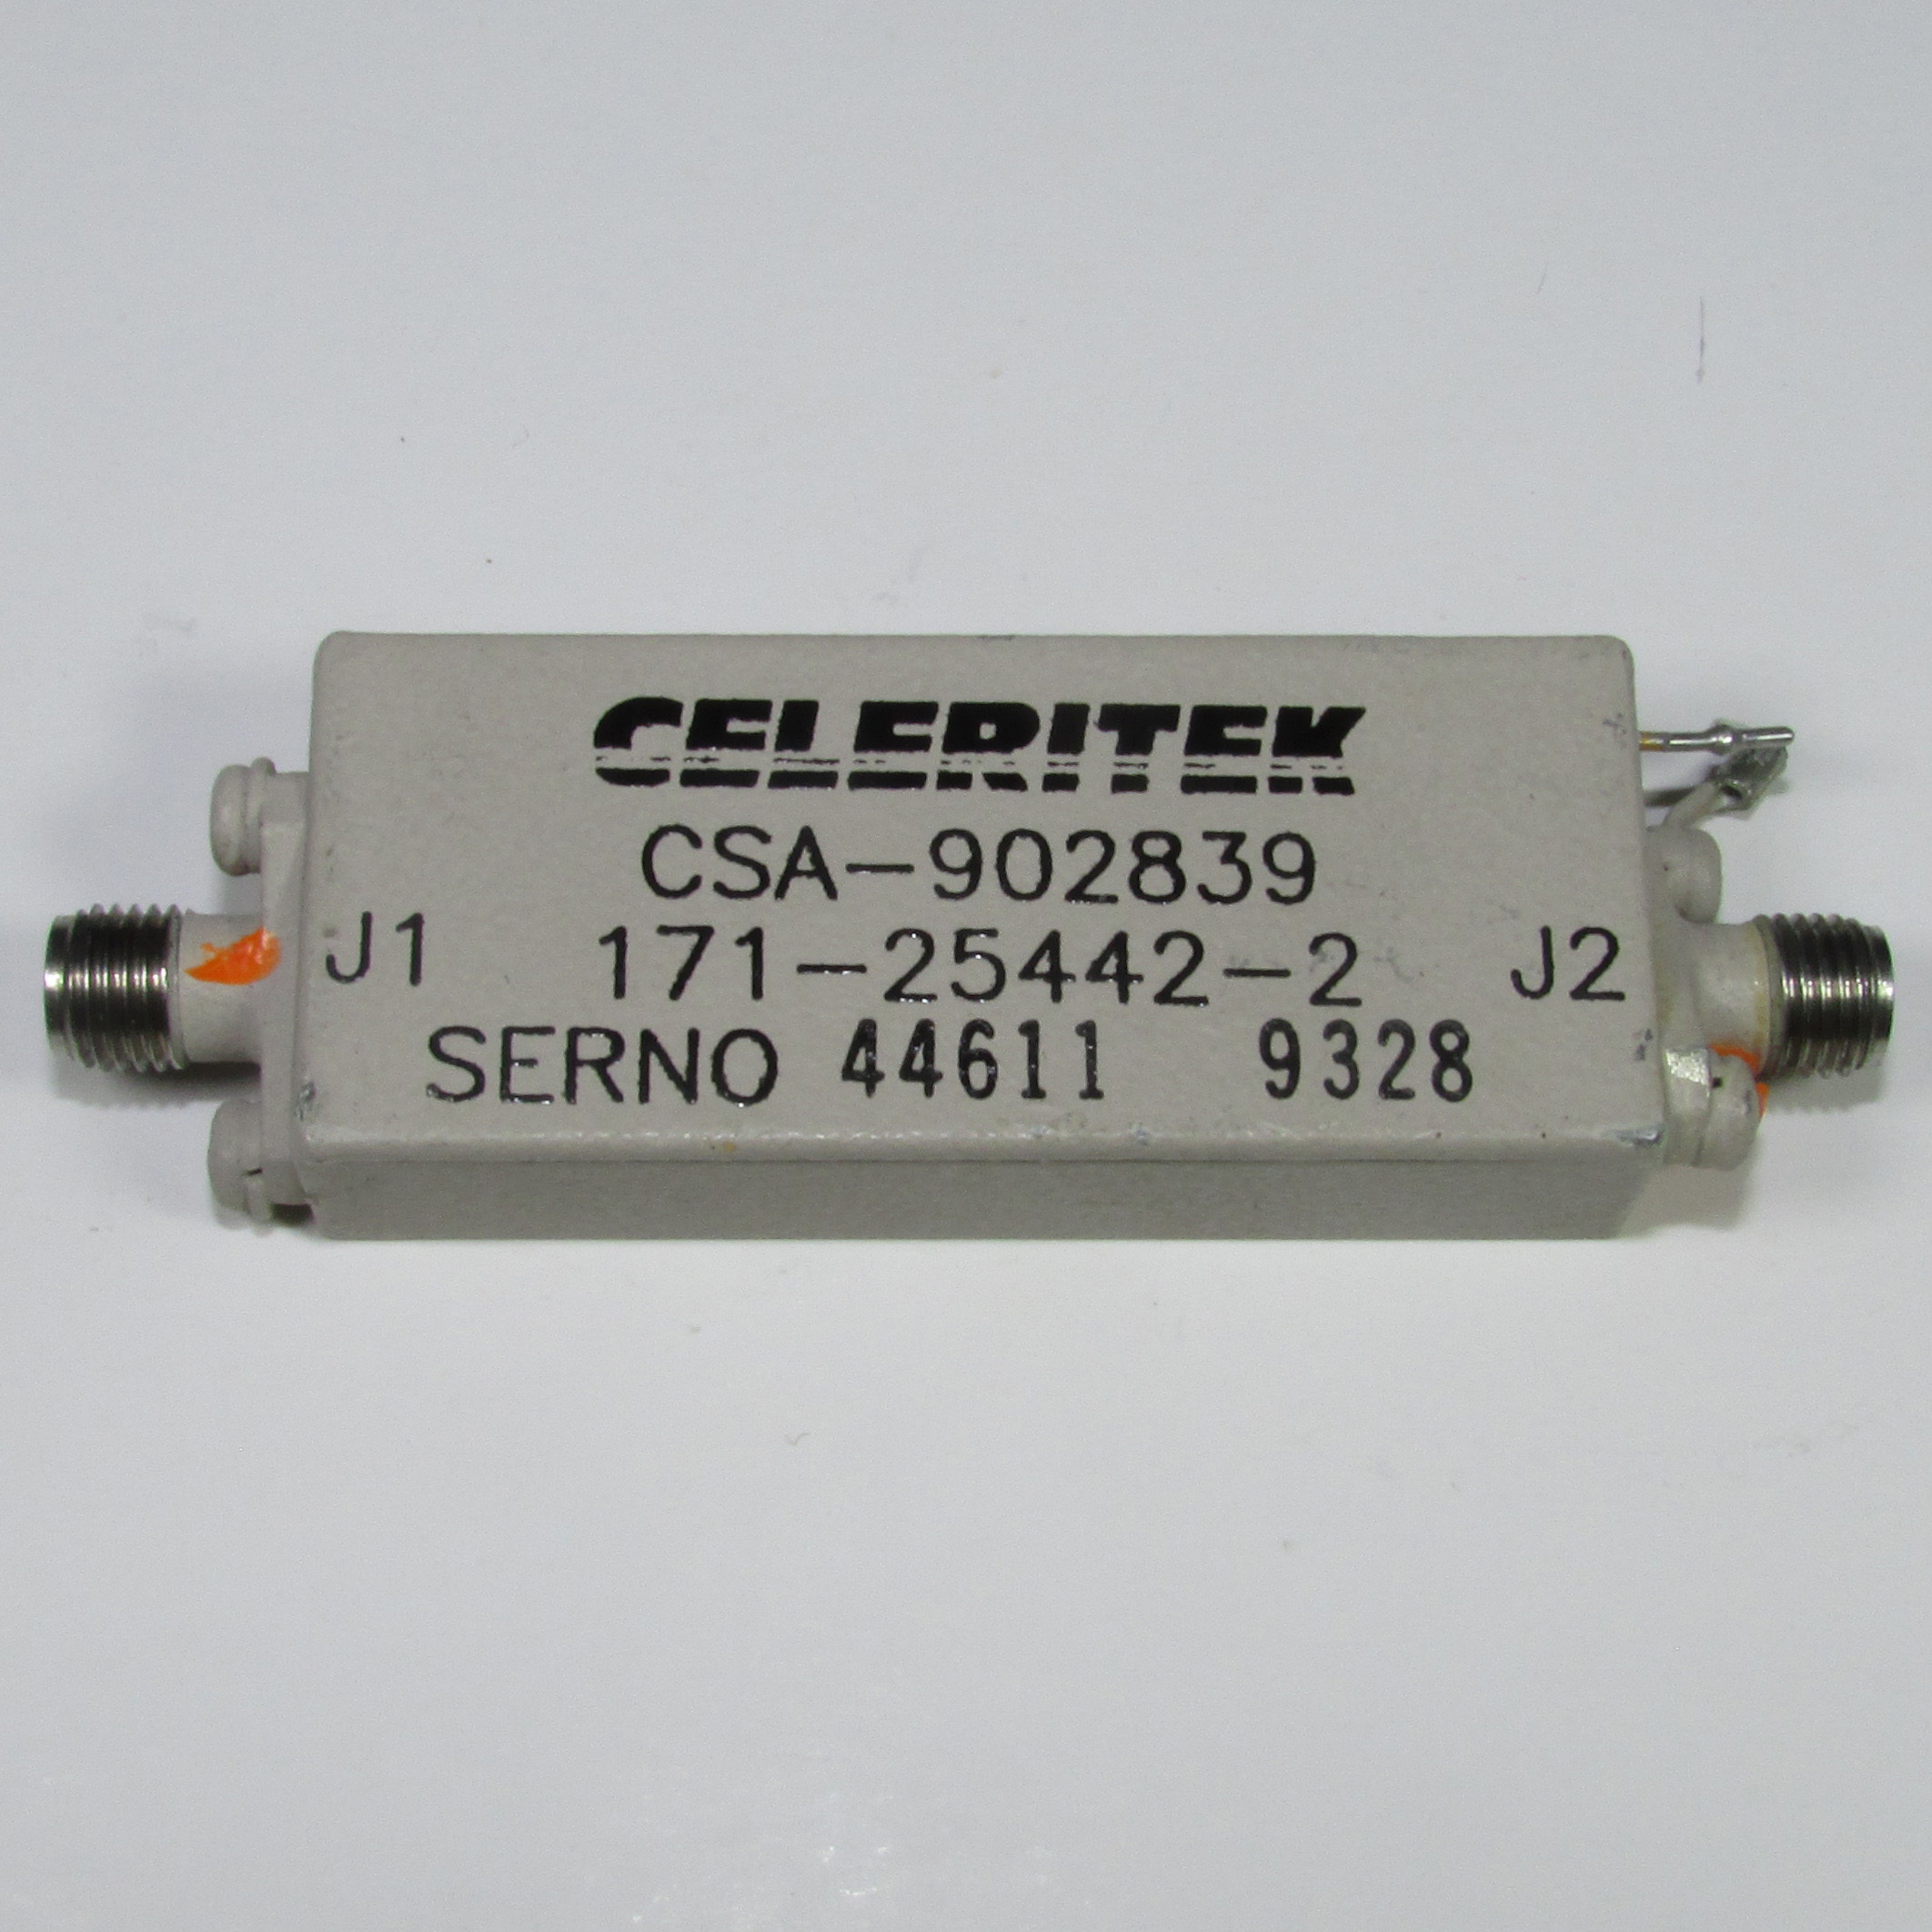 American CELERITEK CSA-902839 2-6GHz 23dB 25dBm SMA microwave power amplifier